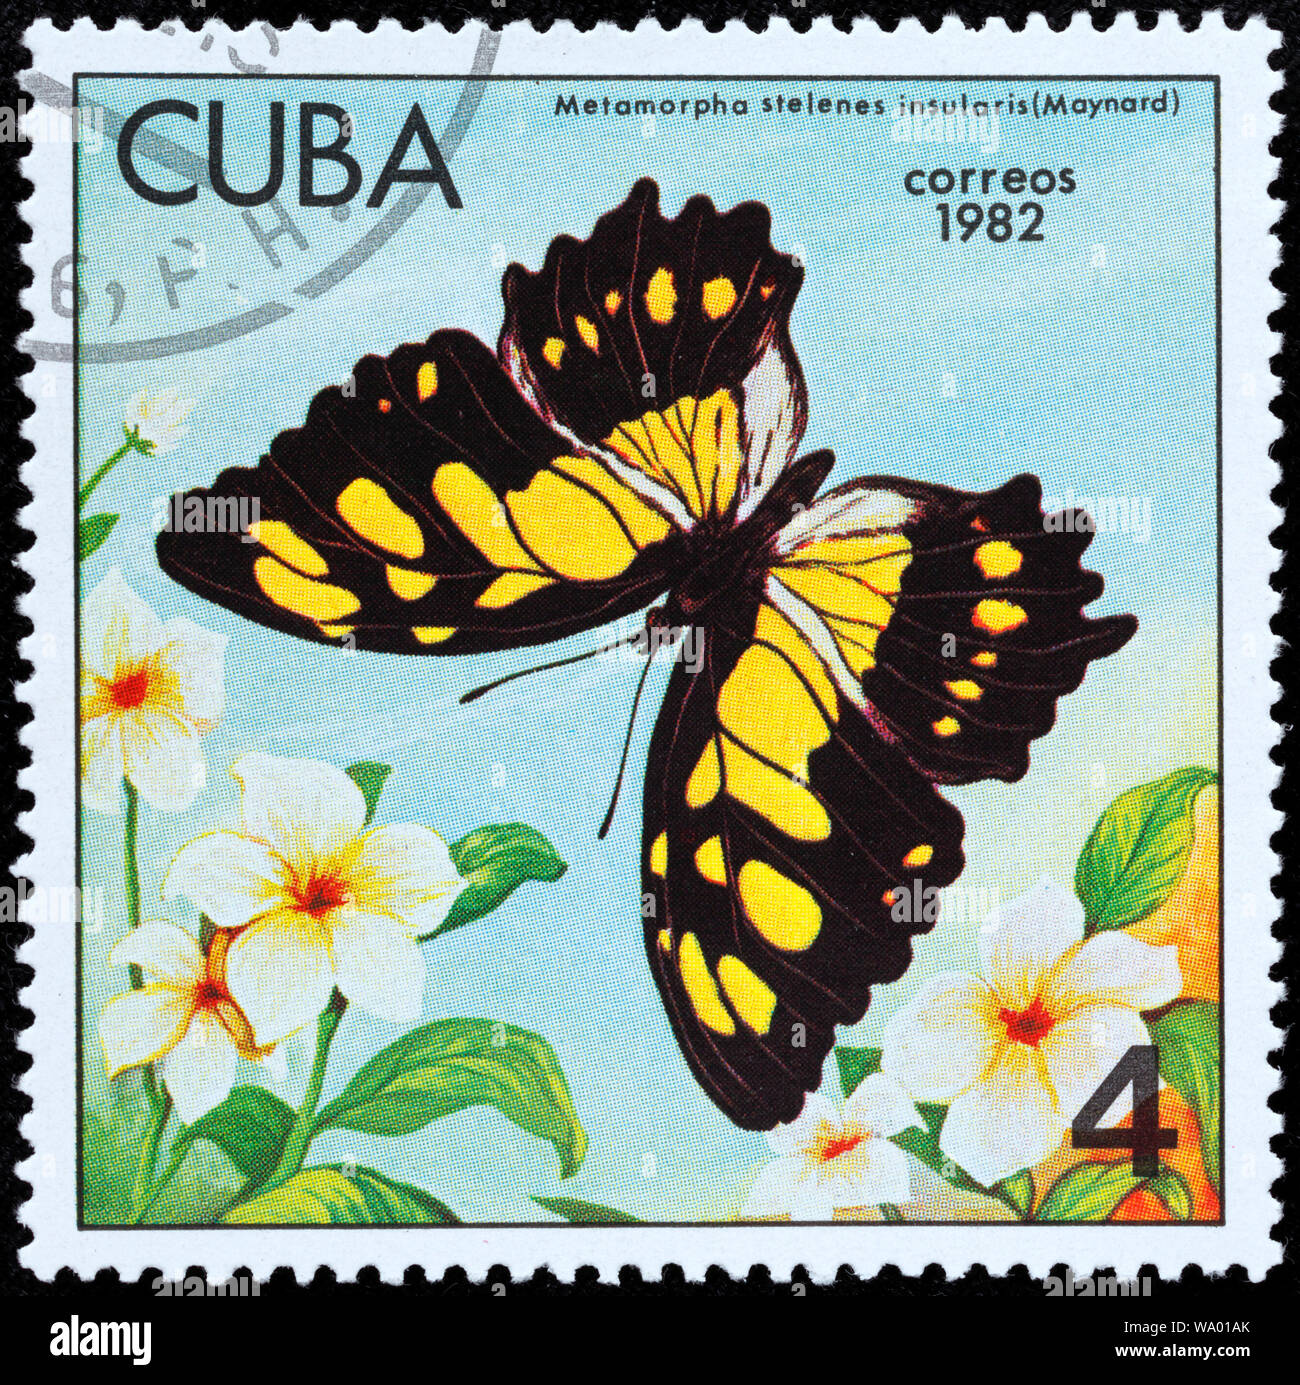 Malachite, Metamorpha stelenes insularis, Siproeta stelenes, postage stamp, Cuba, 1982 Stock Photo